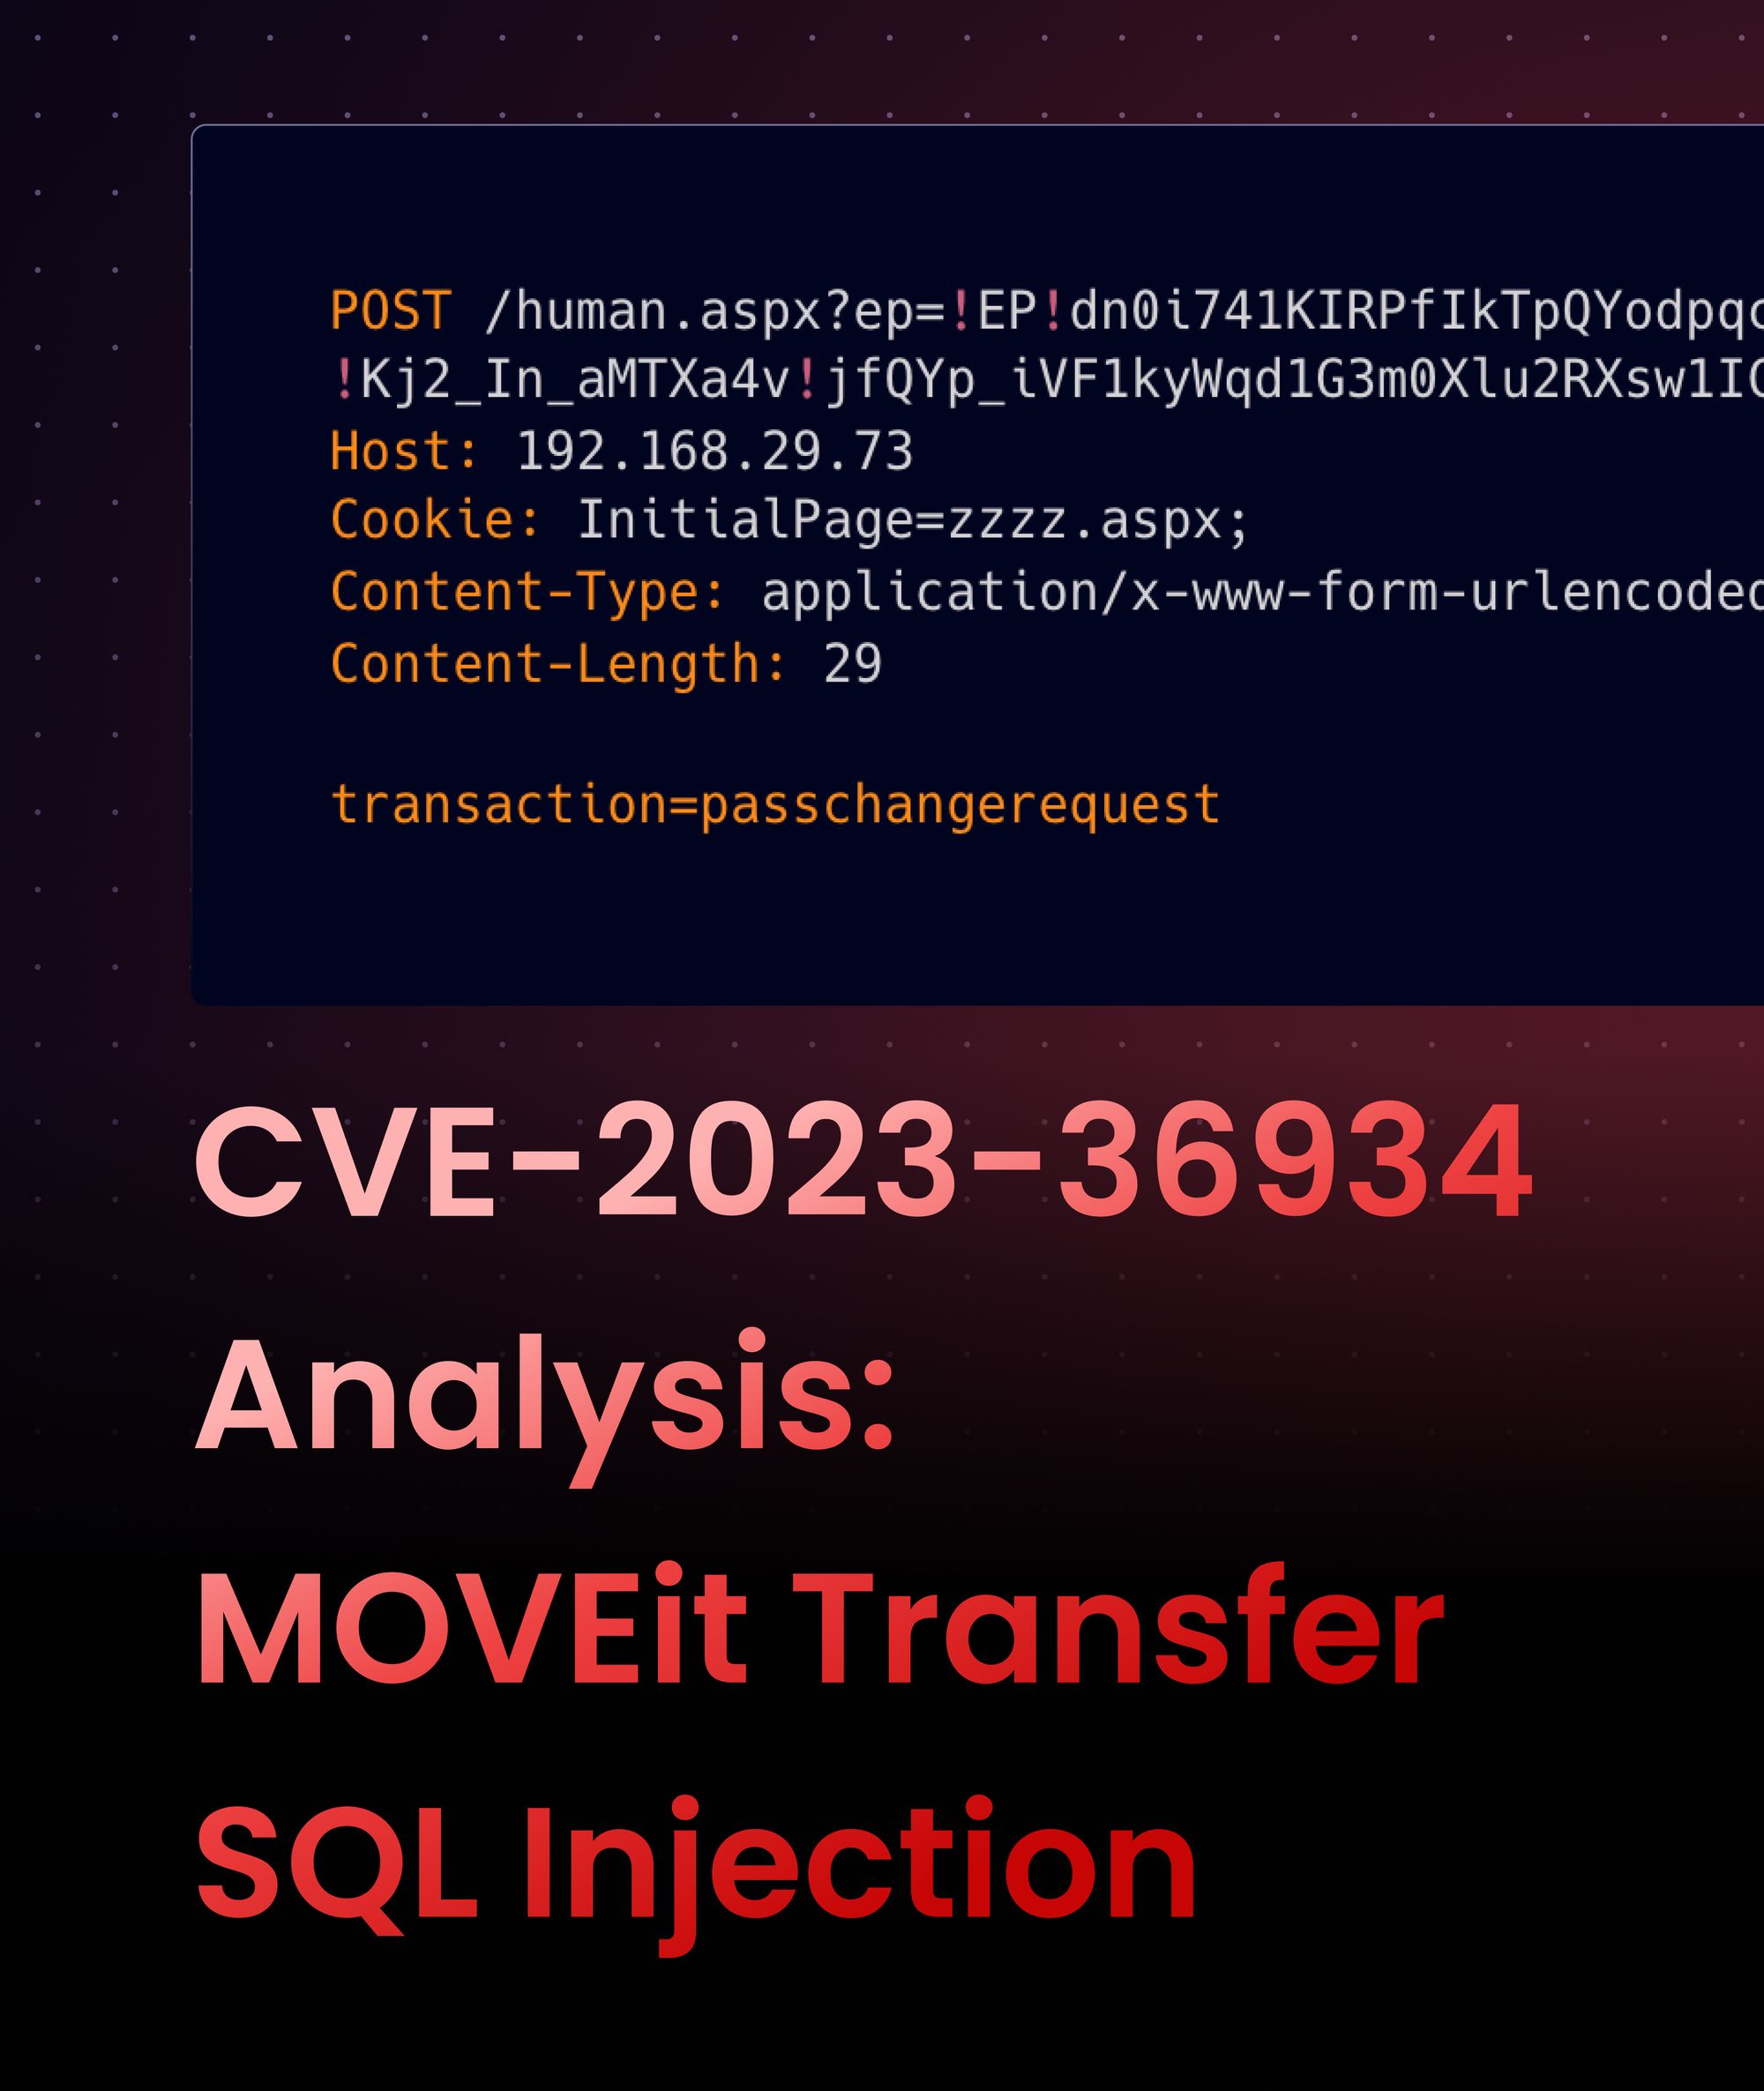 CVE-2023-36934 Analysis: MOVEit Transfer SQL Injection